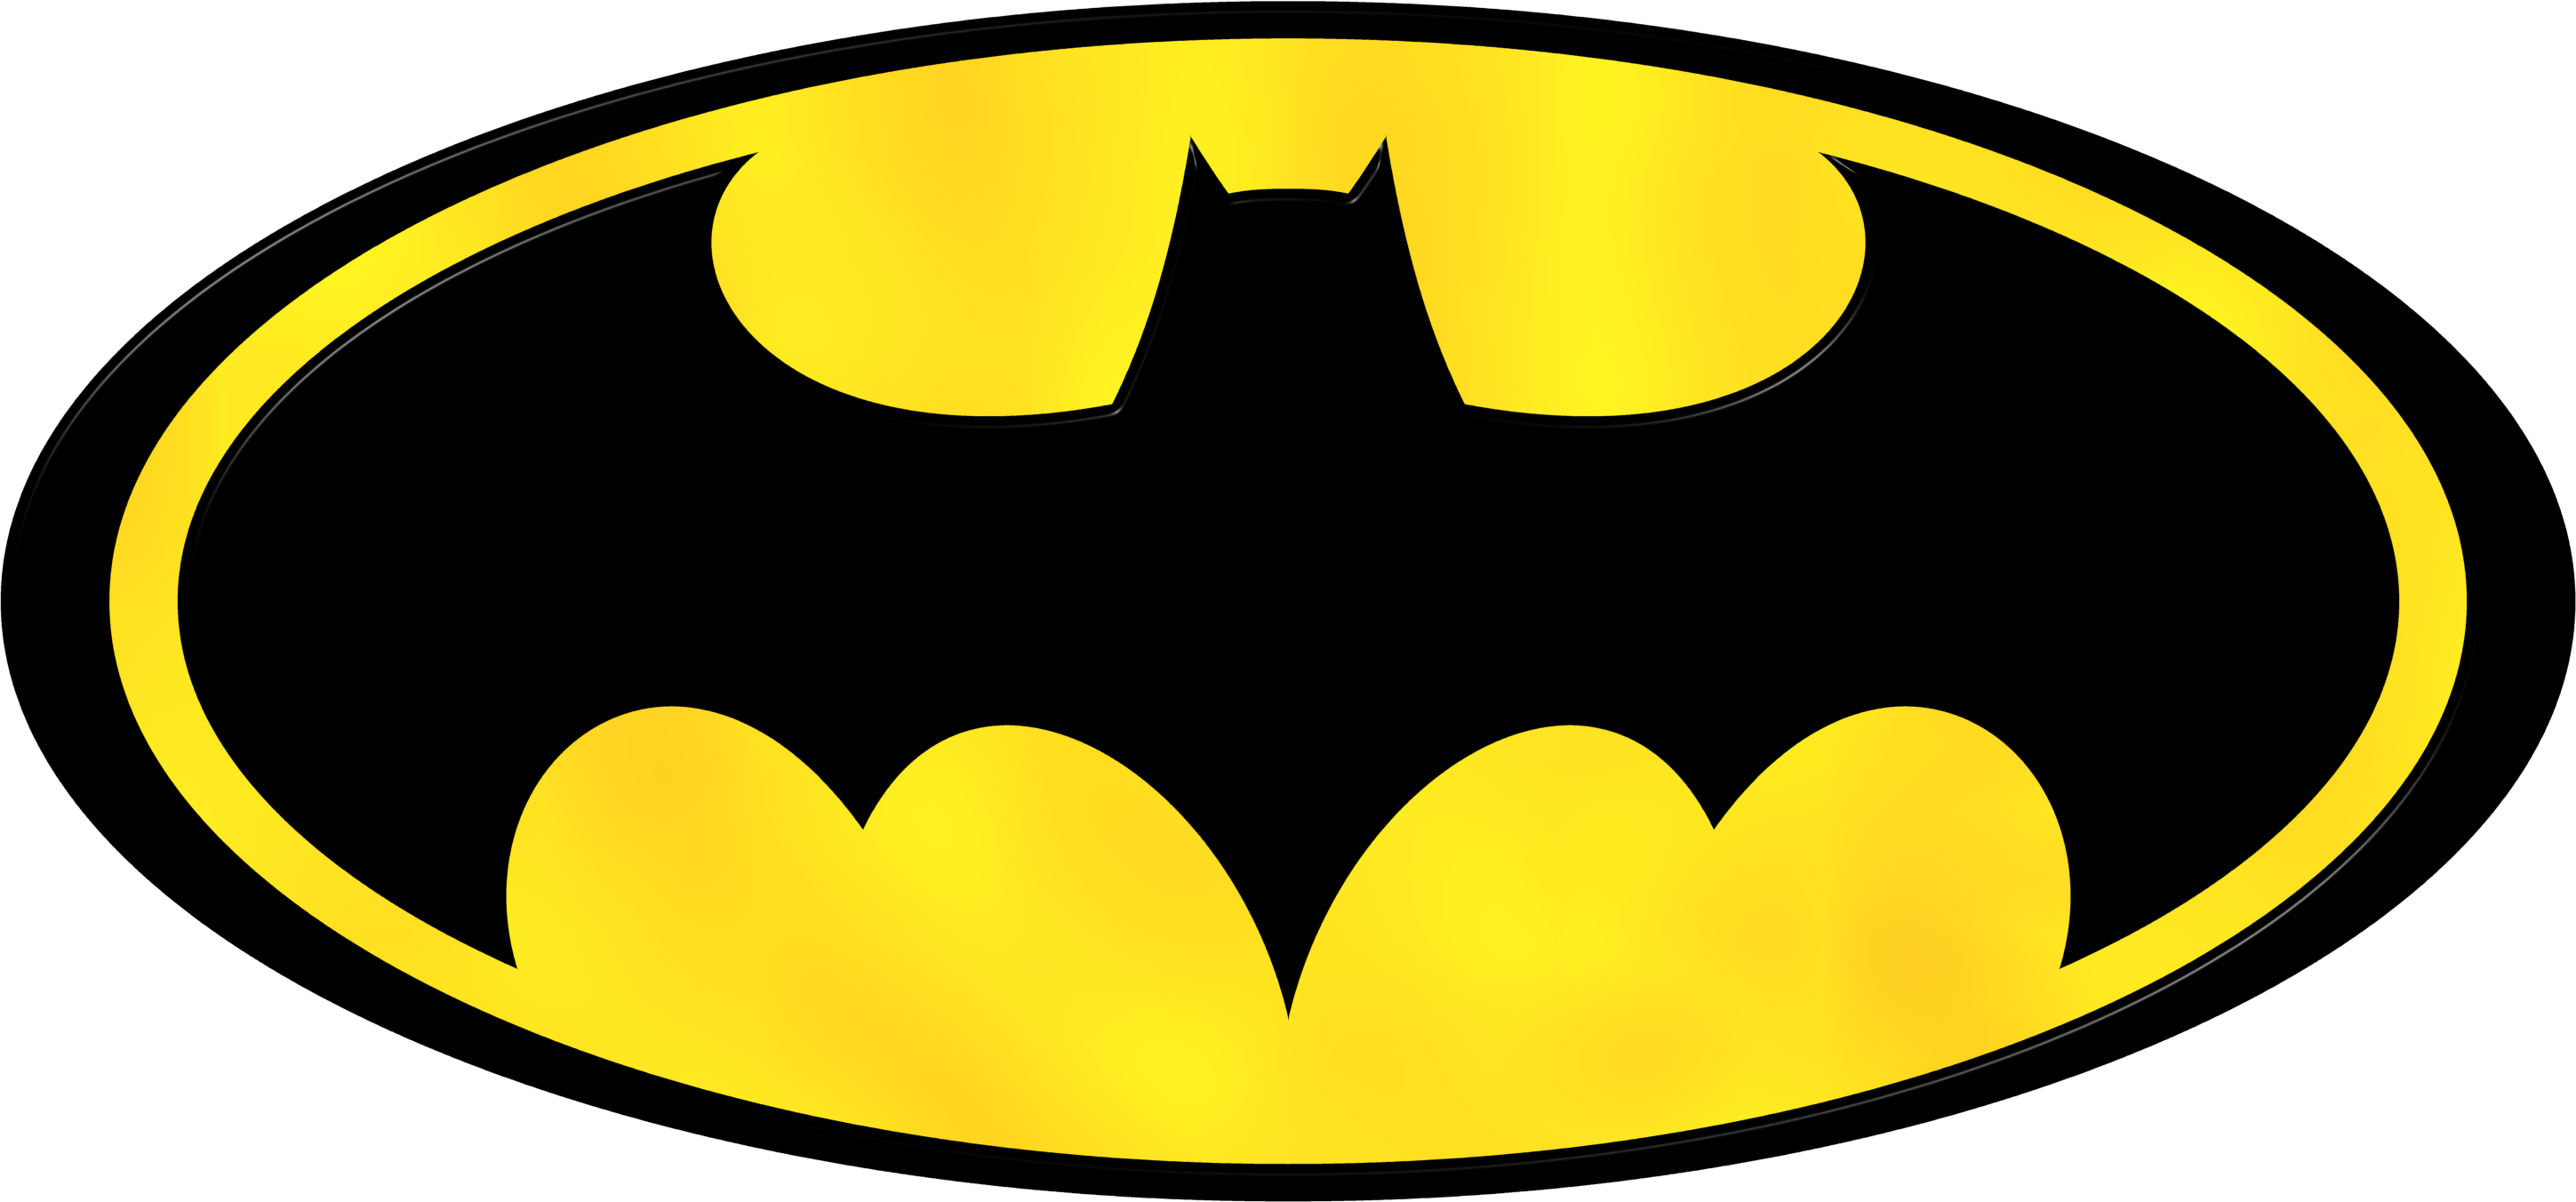 Batman File PNG Image